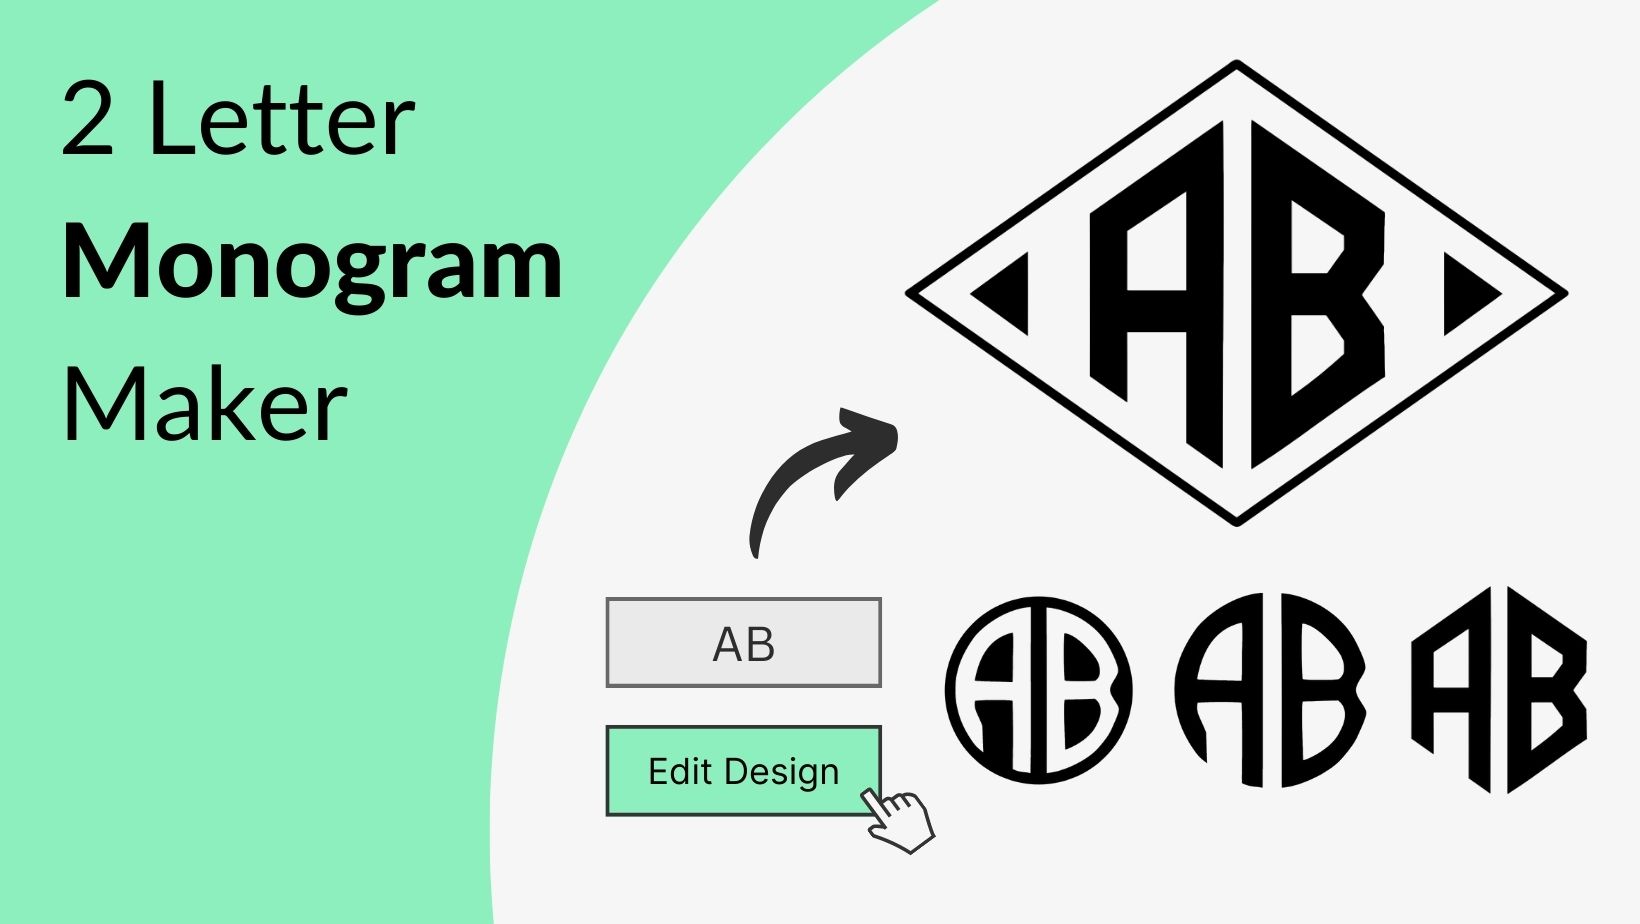 2 letter monogram maker cricut silhouette download free online tool